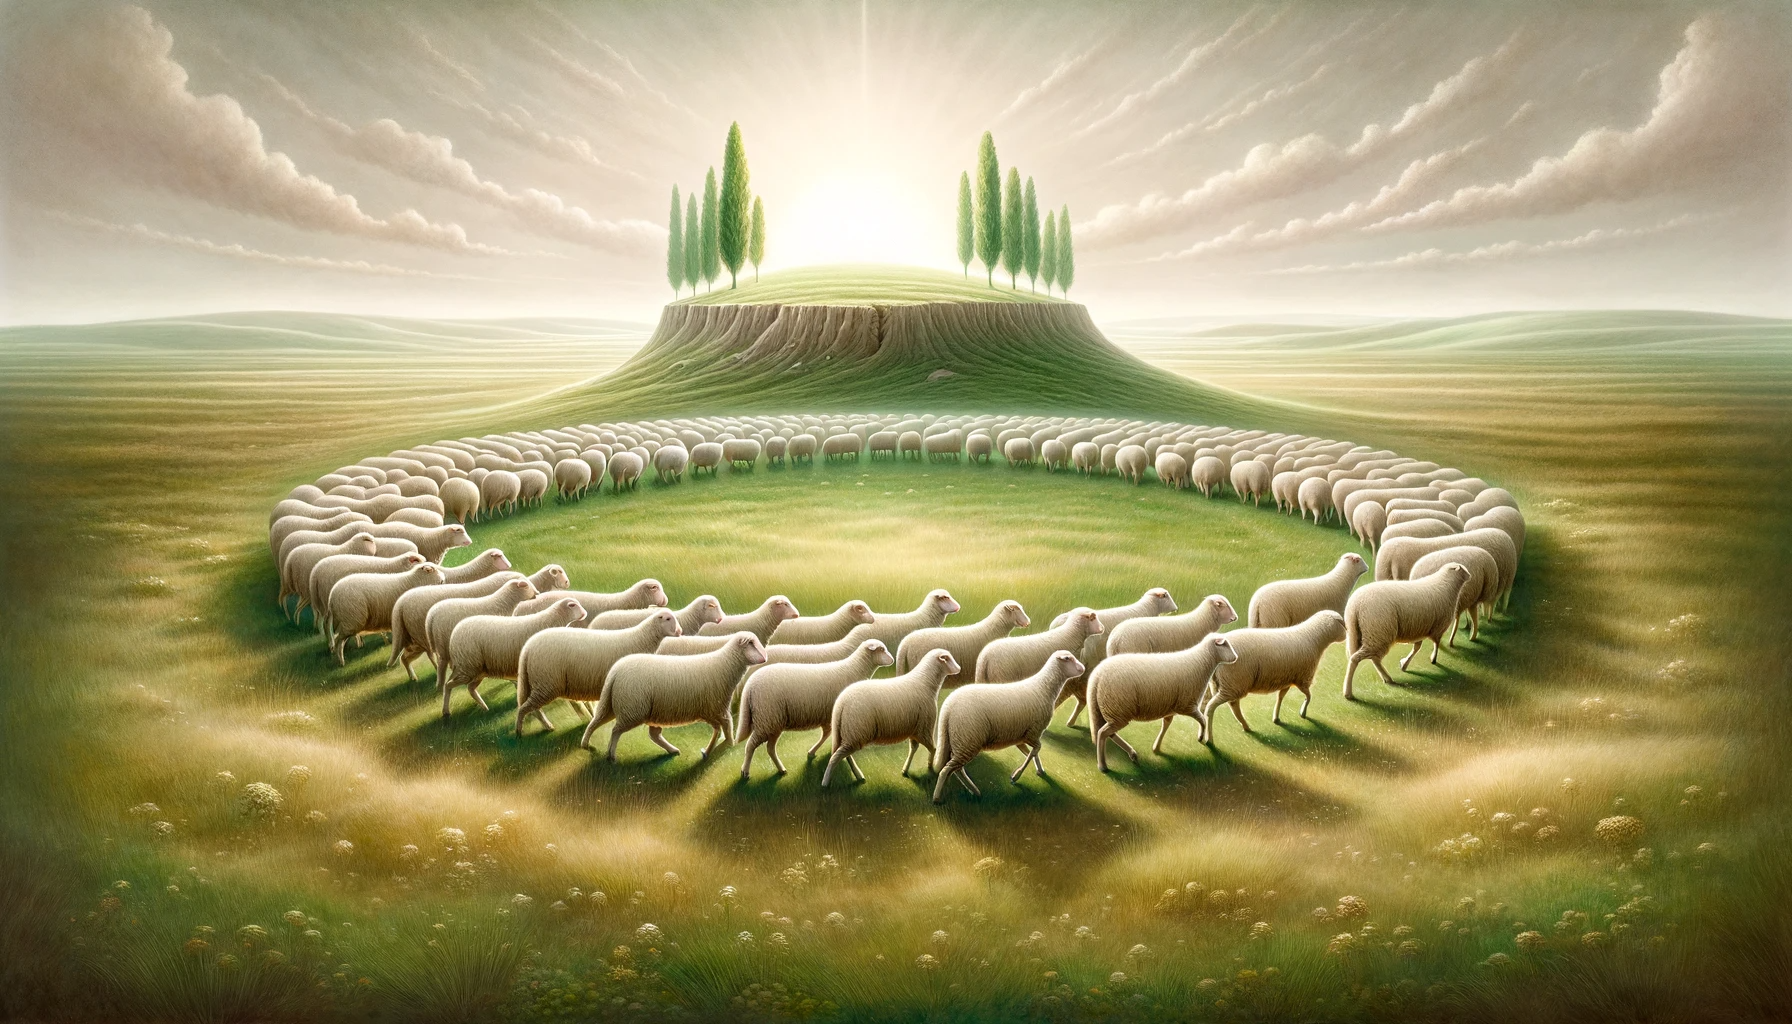 Biblical-Meaning-of-sheep-walking-in-circles